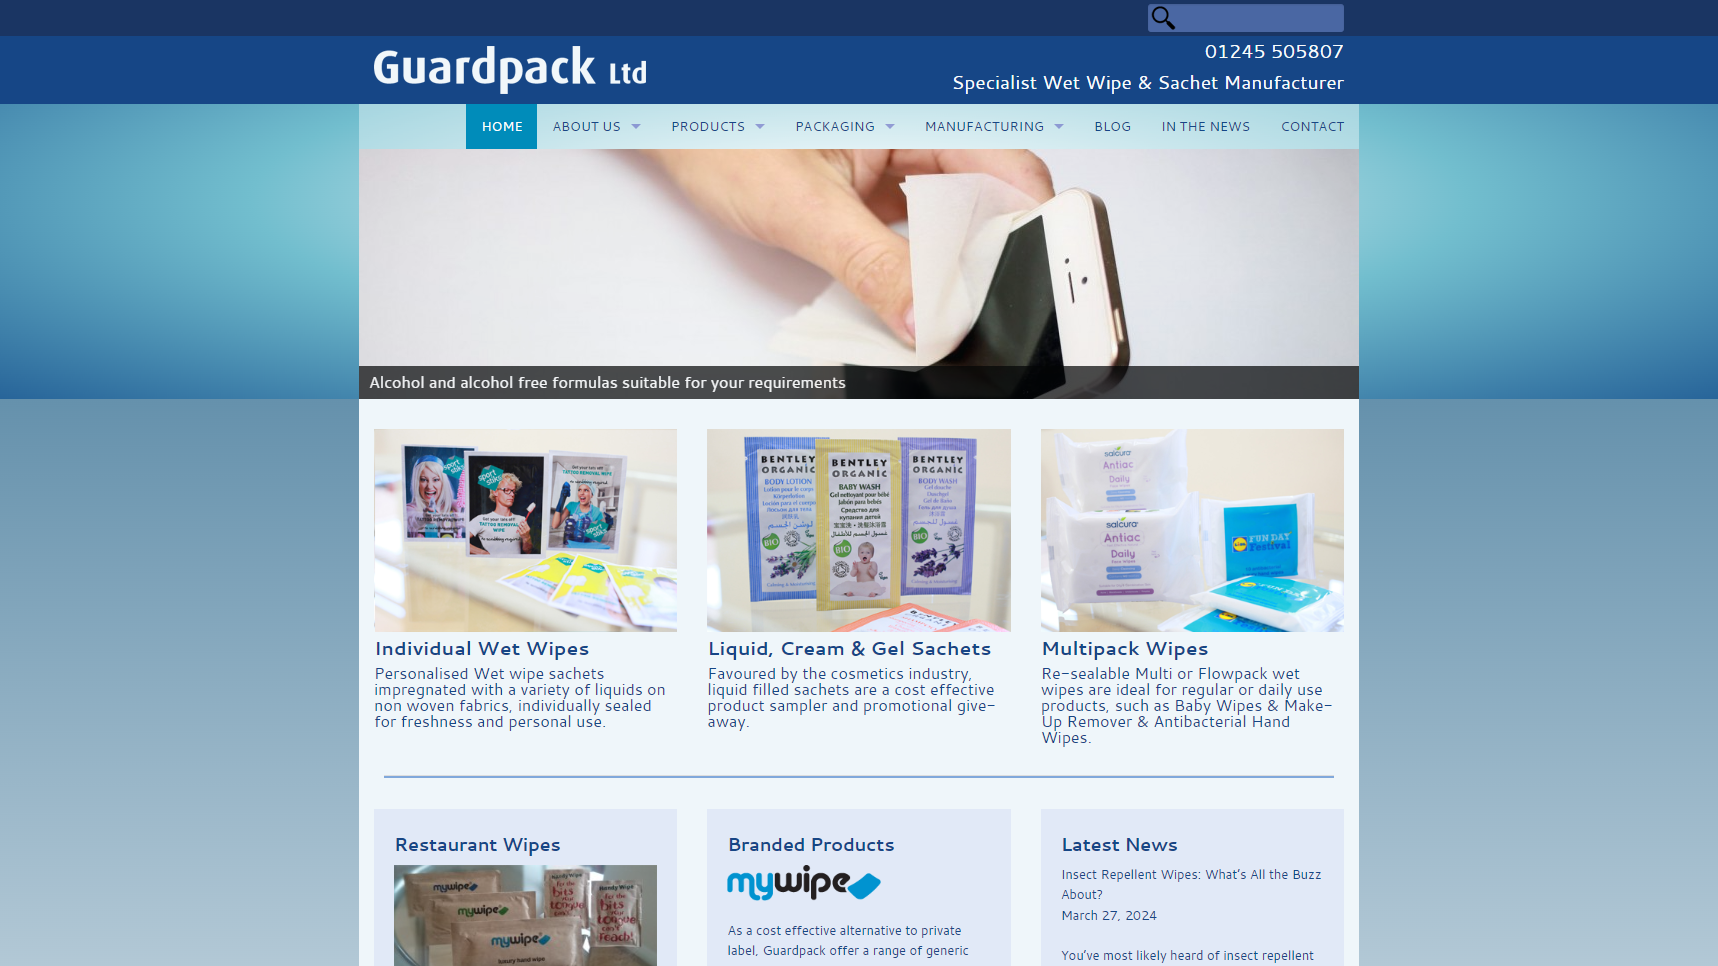 Guardpack - Body Wipes Manufacturer